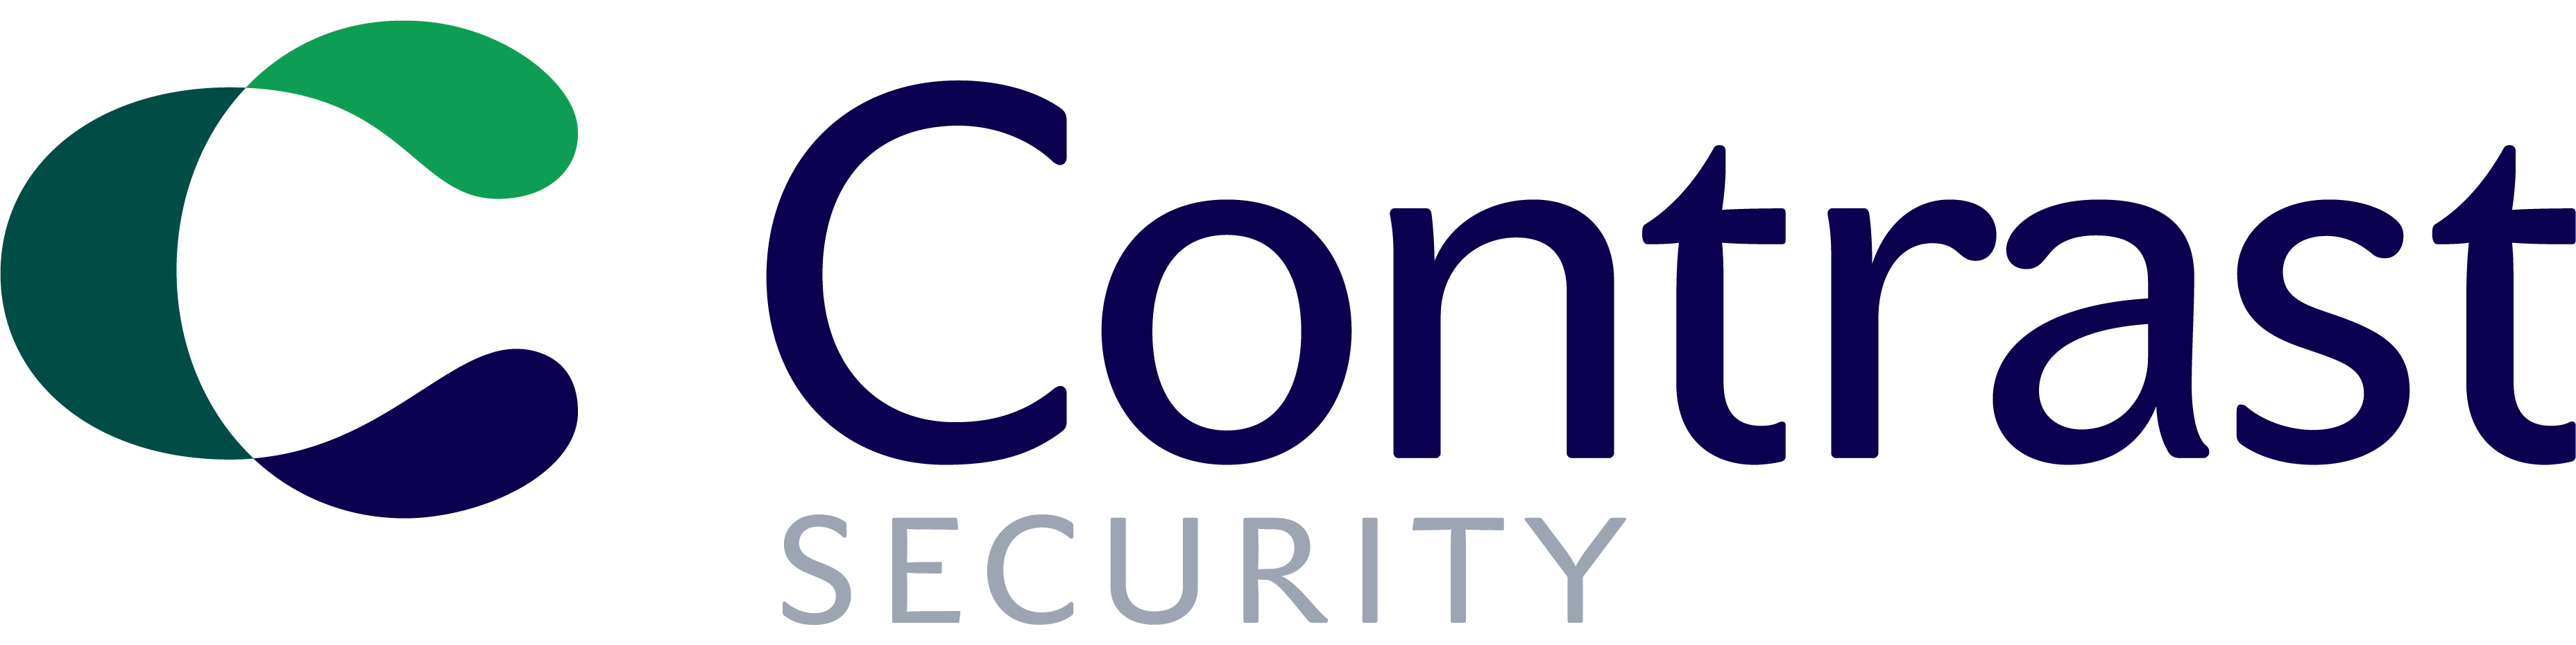 Mkto_Contrast_Security_Logo.png